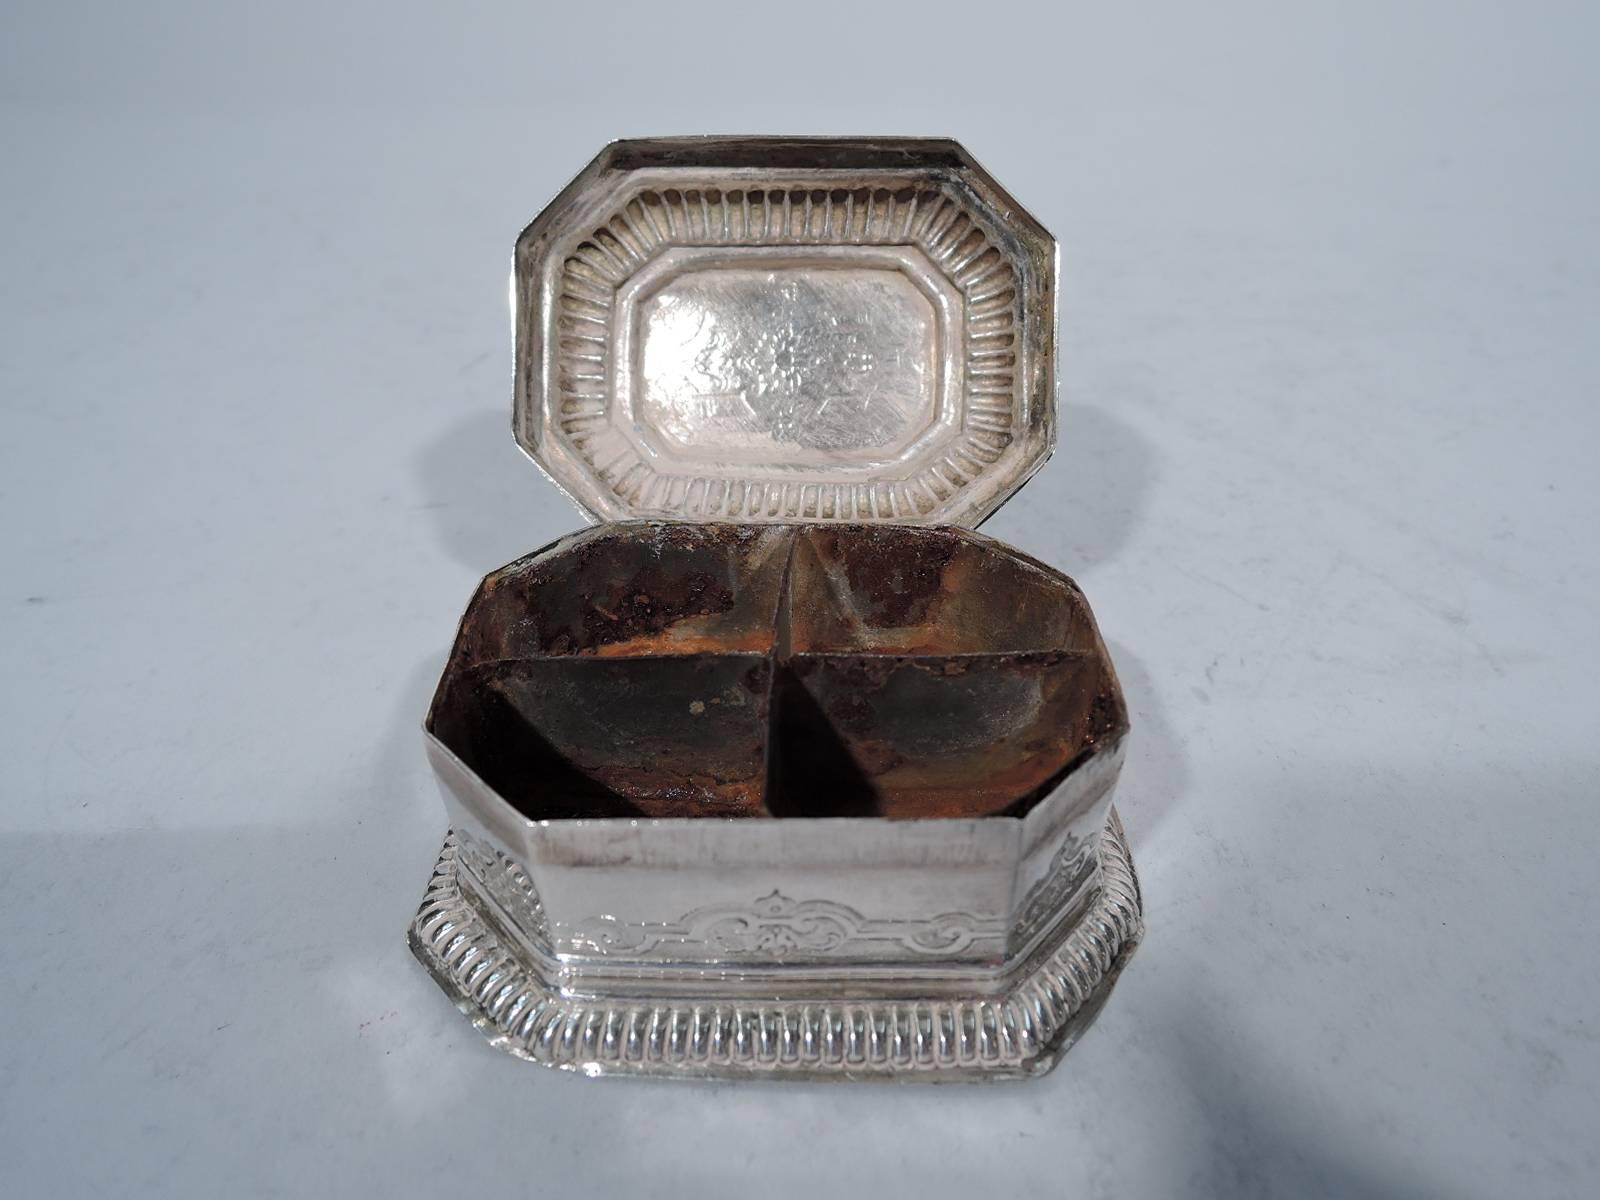 Antique German Silver Spice Box by Eyssler in Nuremberg 1